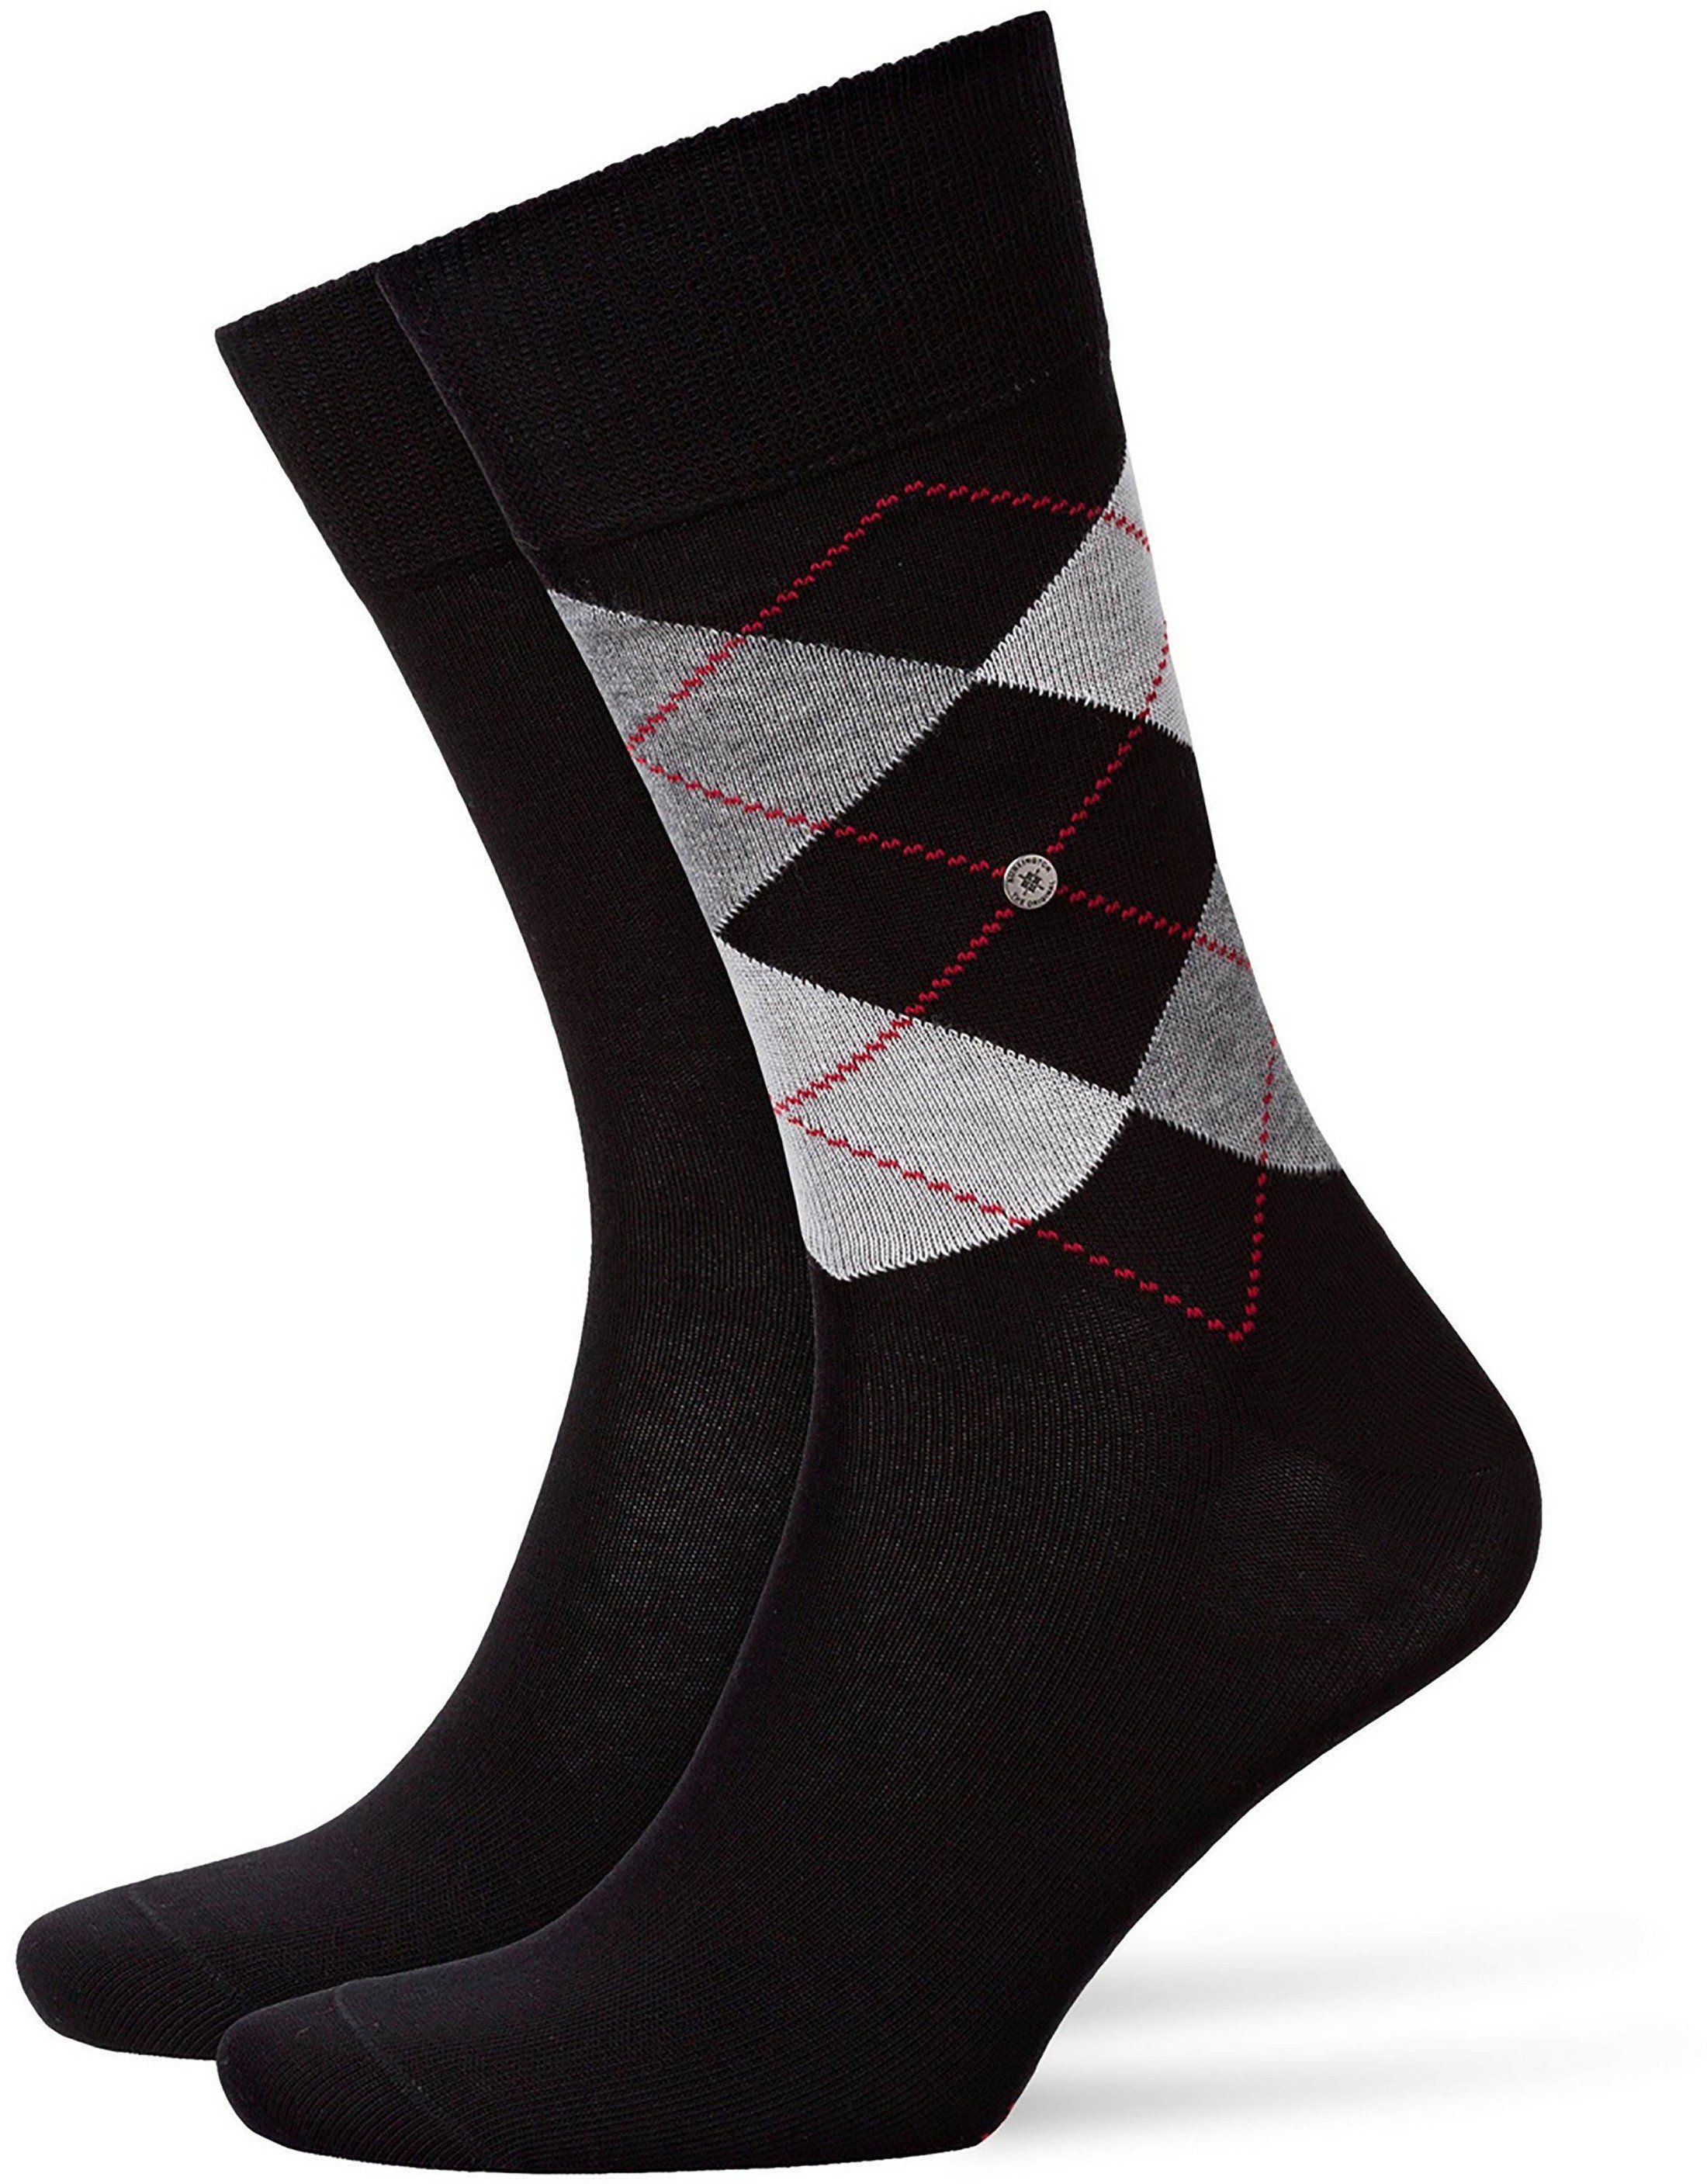 Burlington Socks Everyday Black size 40-46